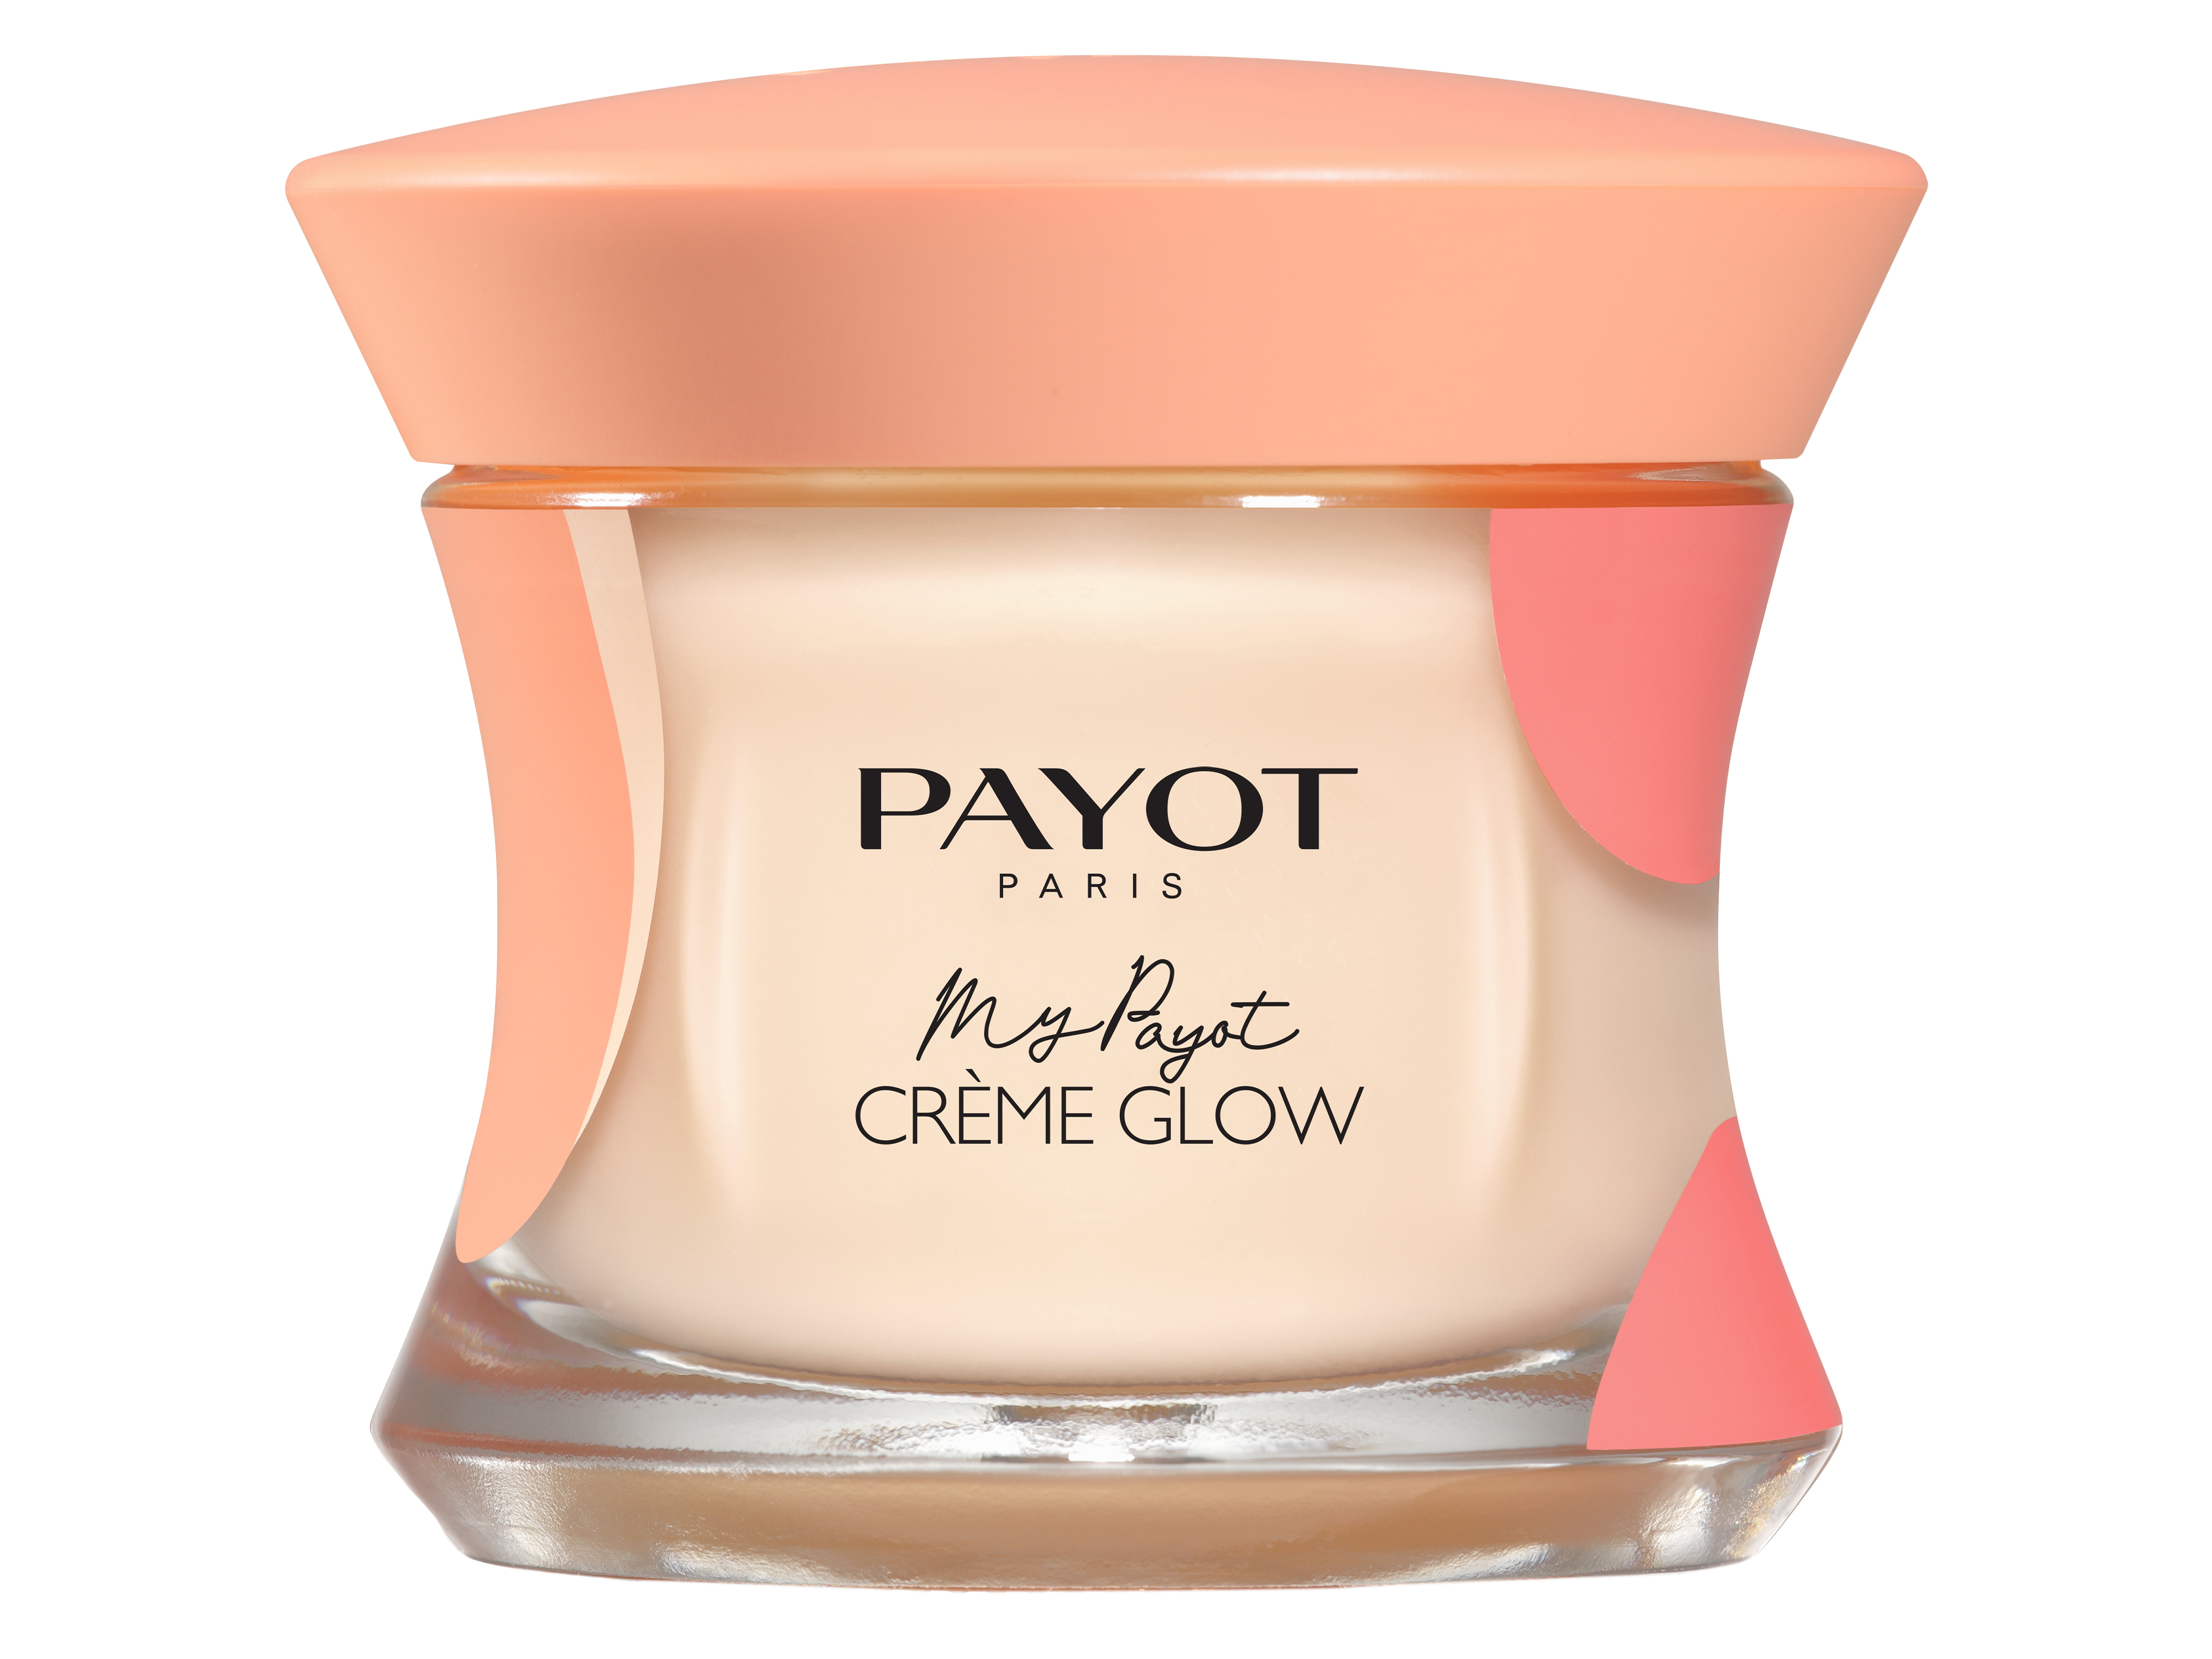 Payot My Payot Creme Glow, 50 ml